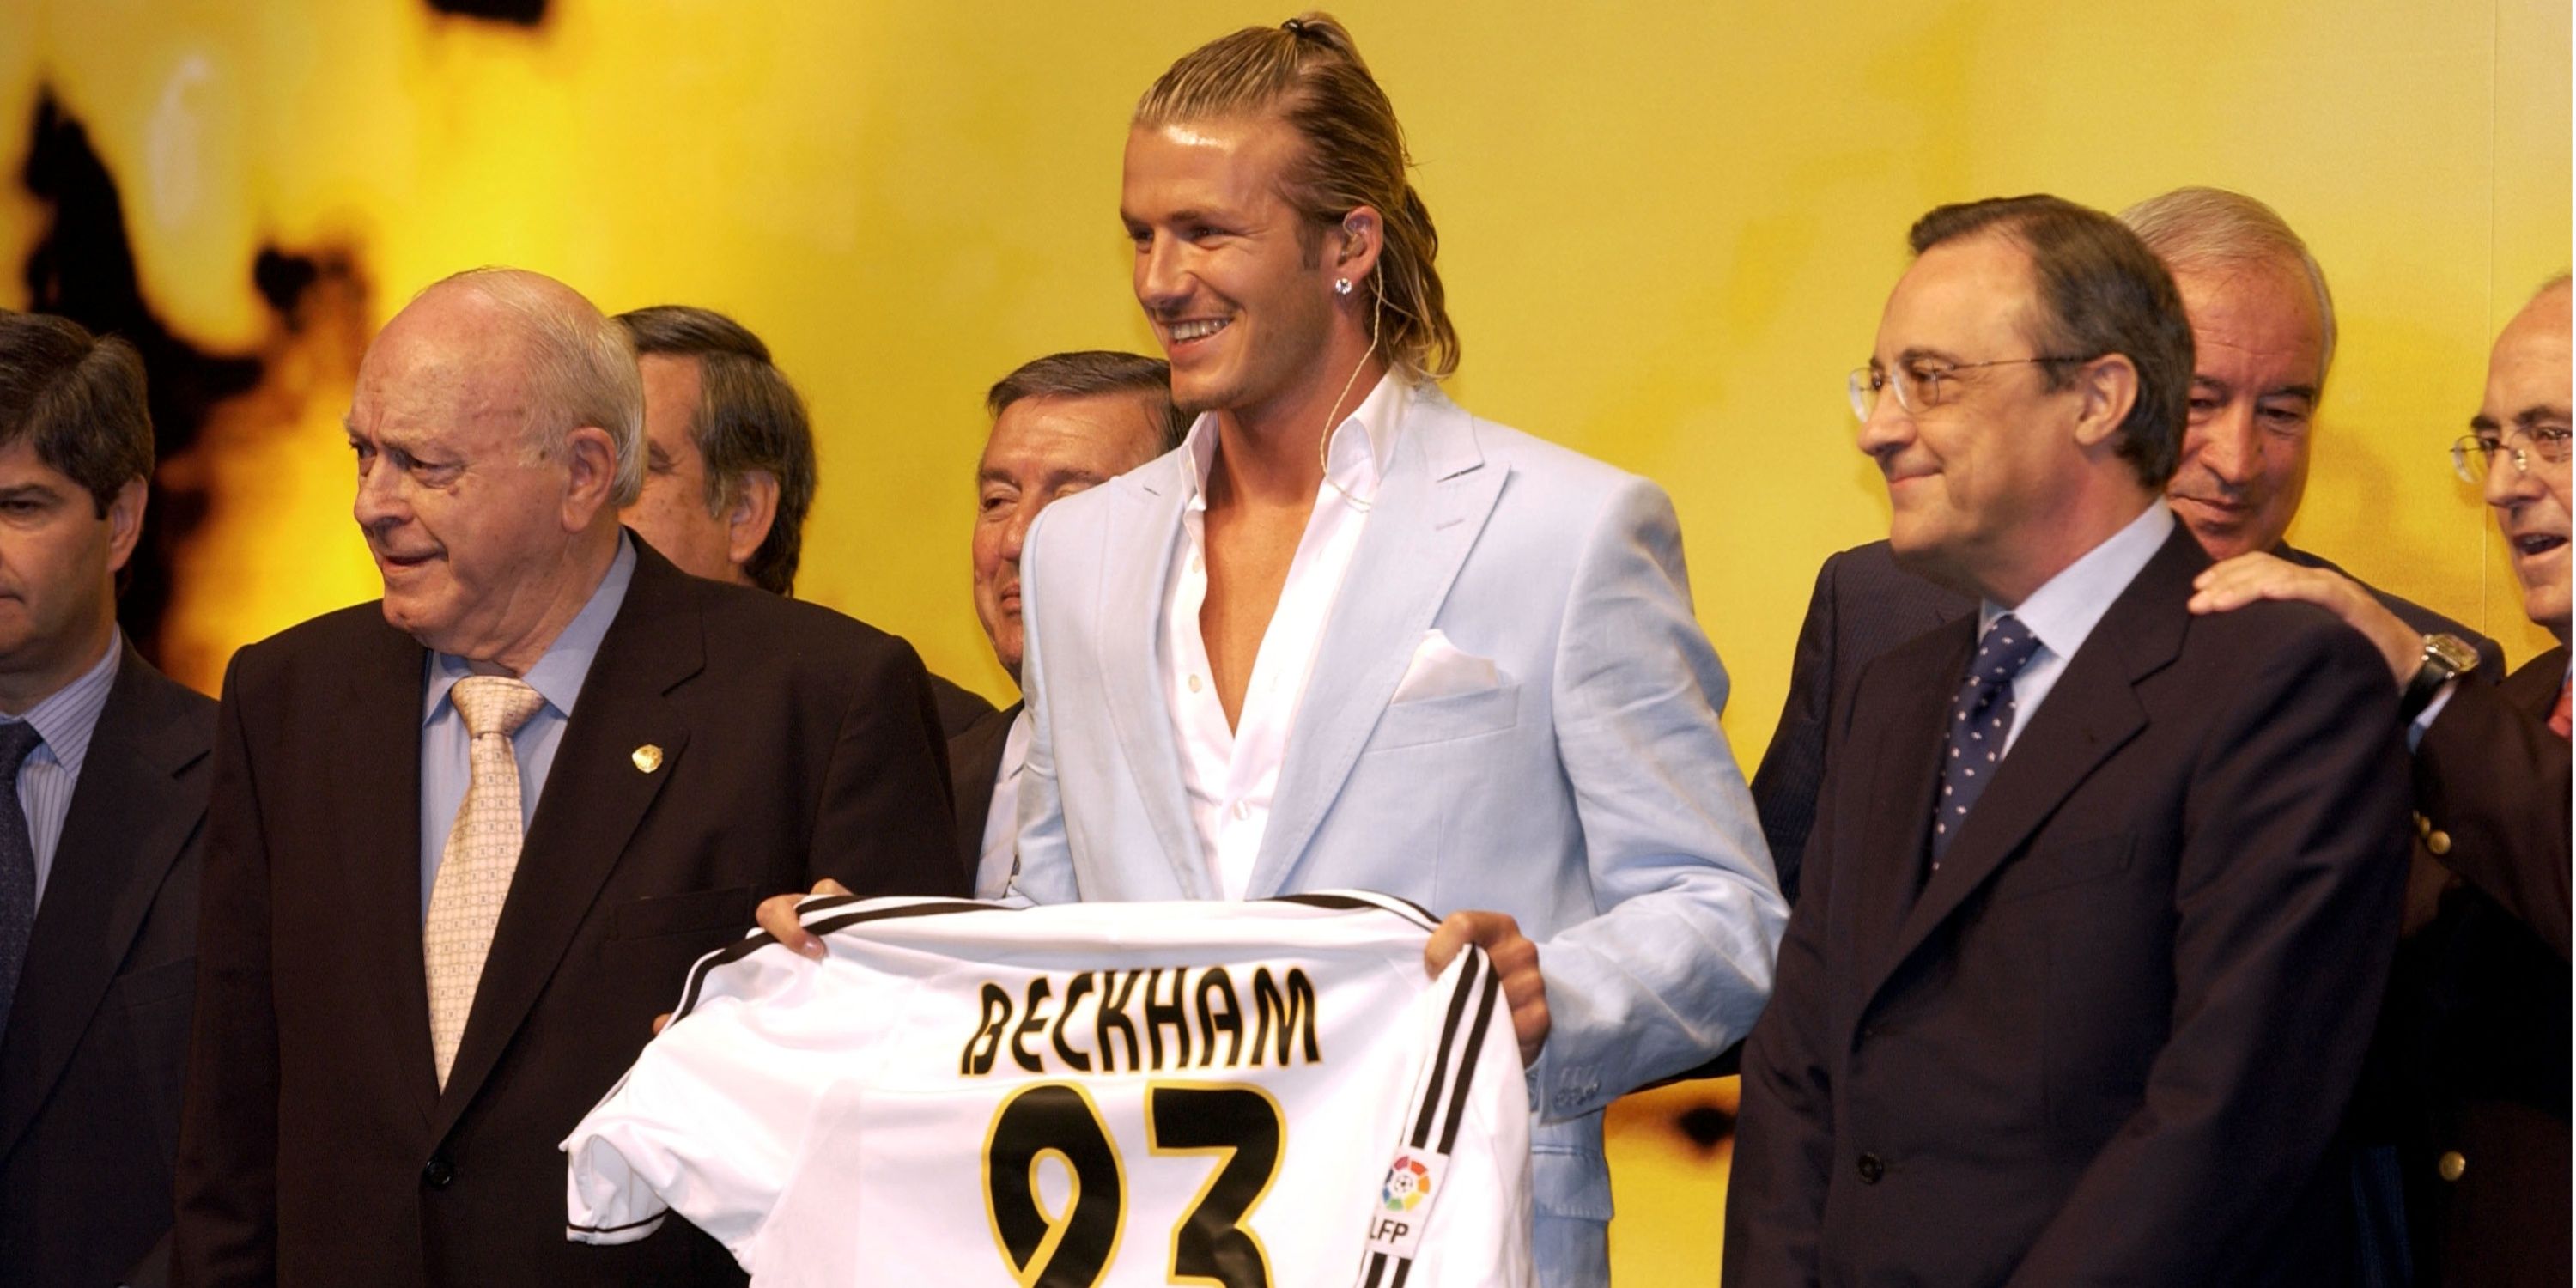 David Beckham signed for Real Madrid in 2003